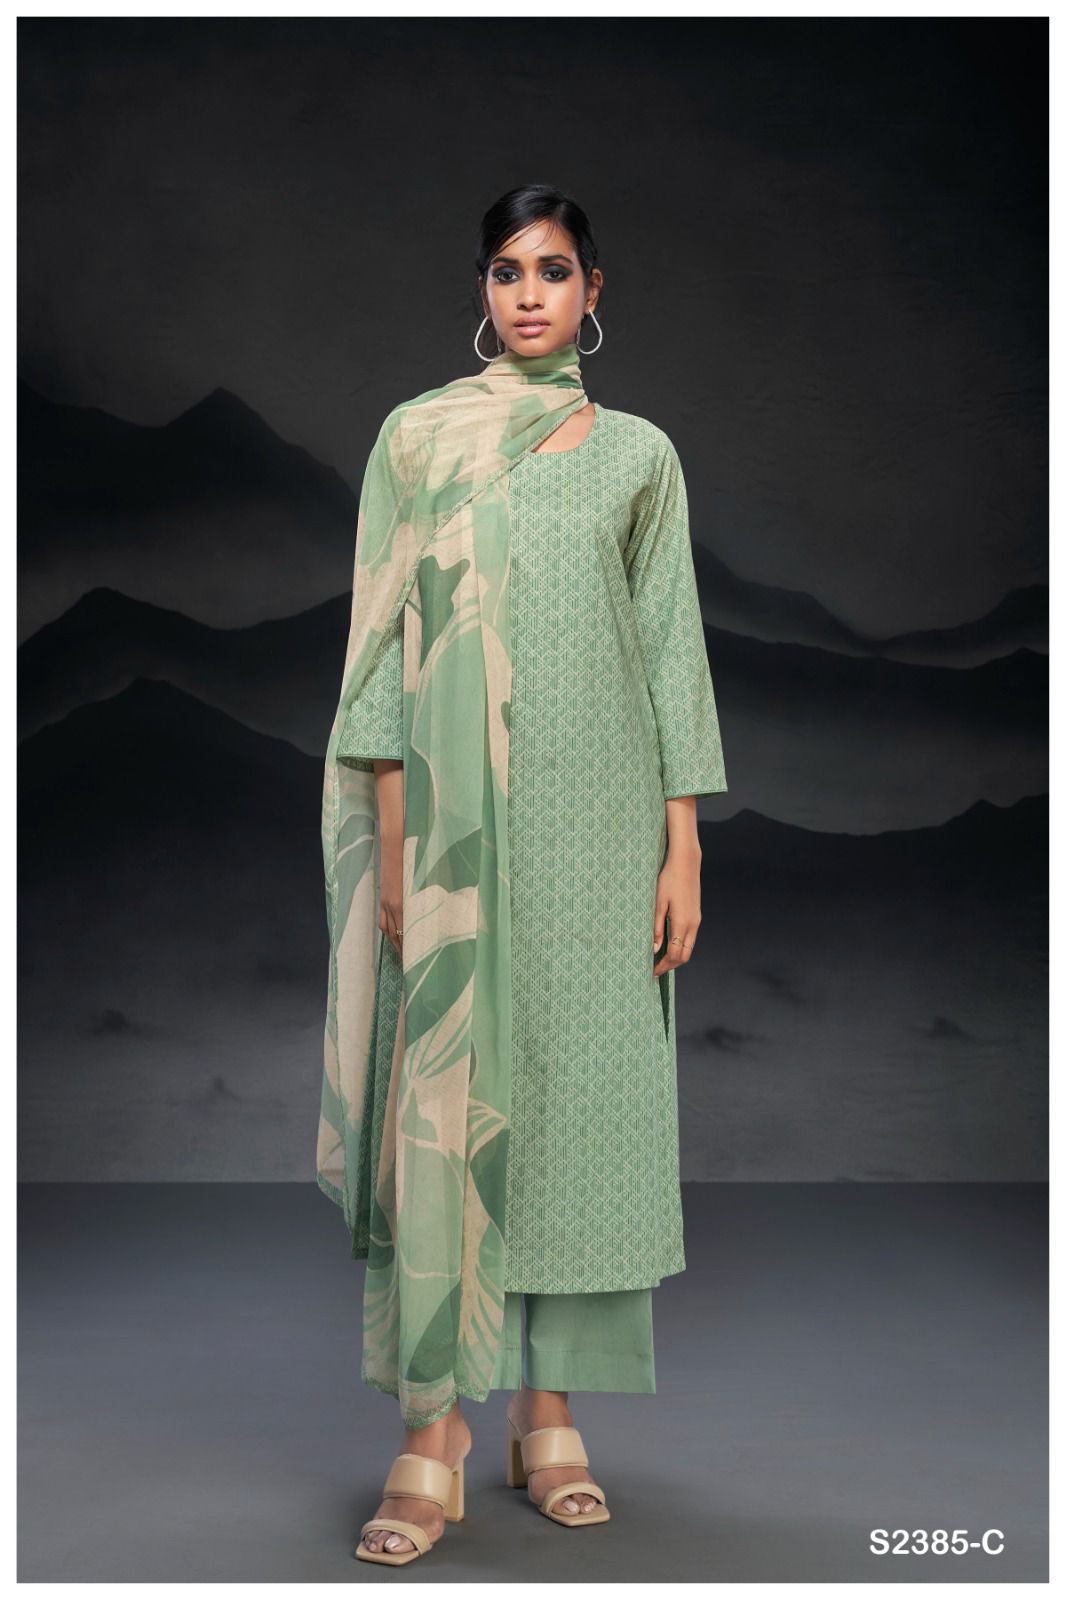 Huntah-2385 Ganga Premium Cotton Plazzo Style Suits